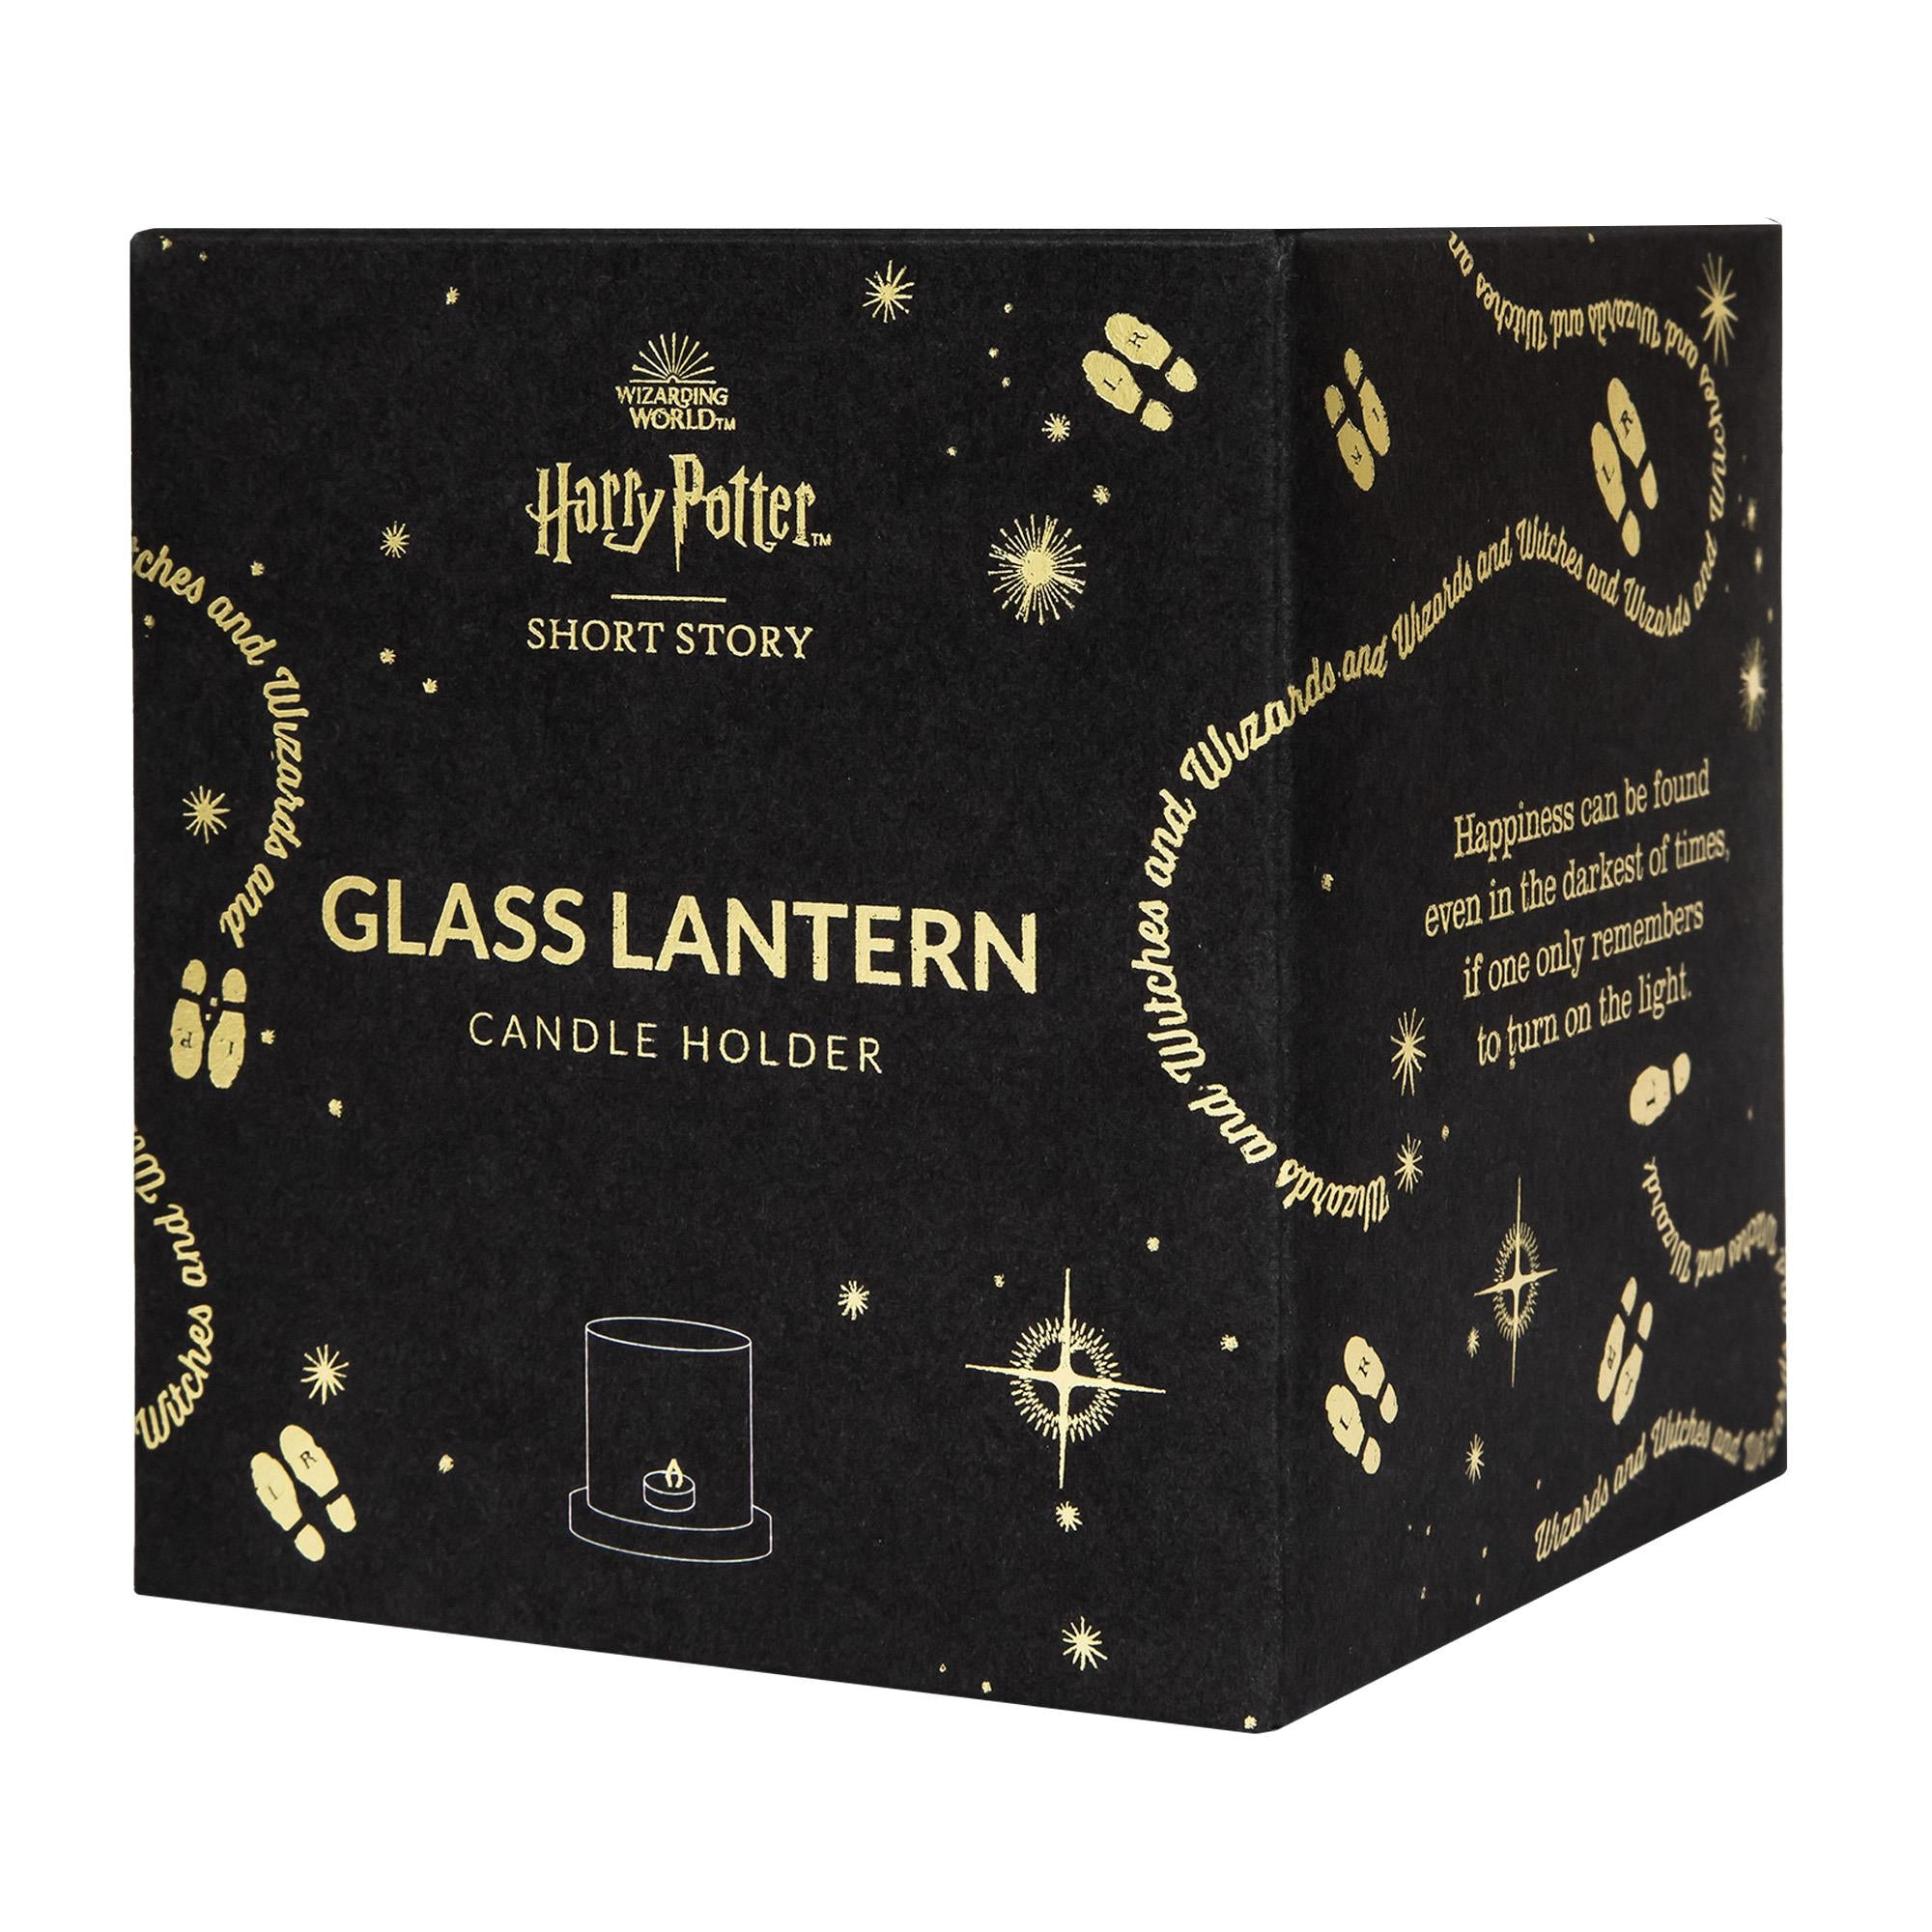 Short Story - Harry Potter Mini Glass Lantern Journey to Hogwarts